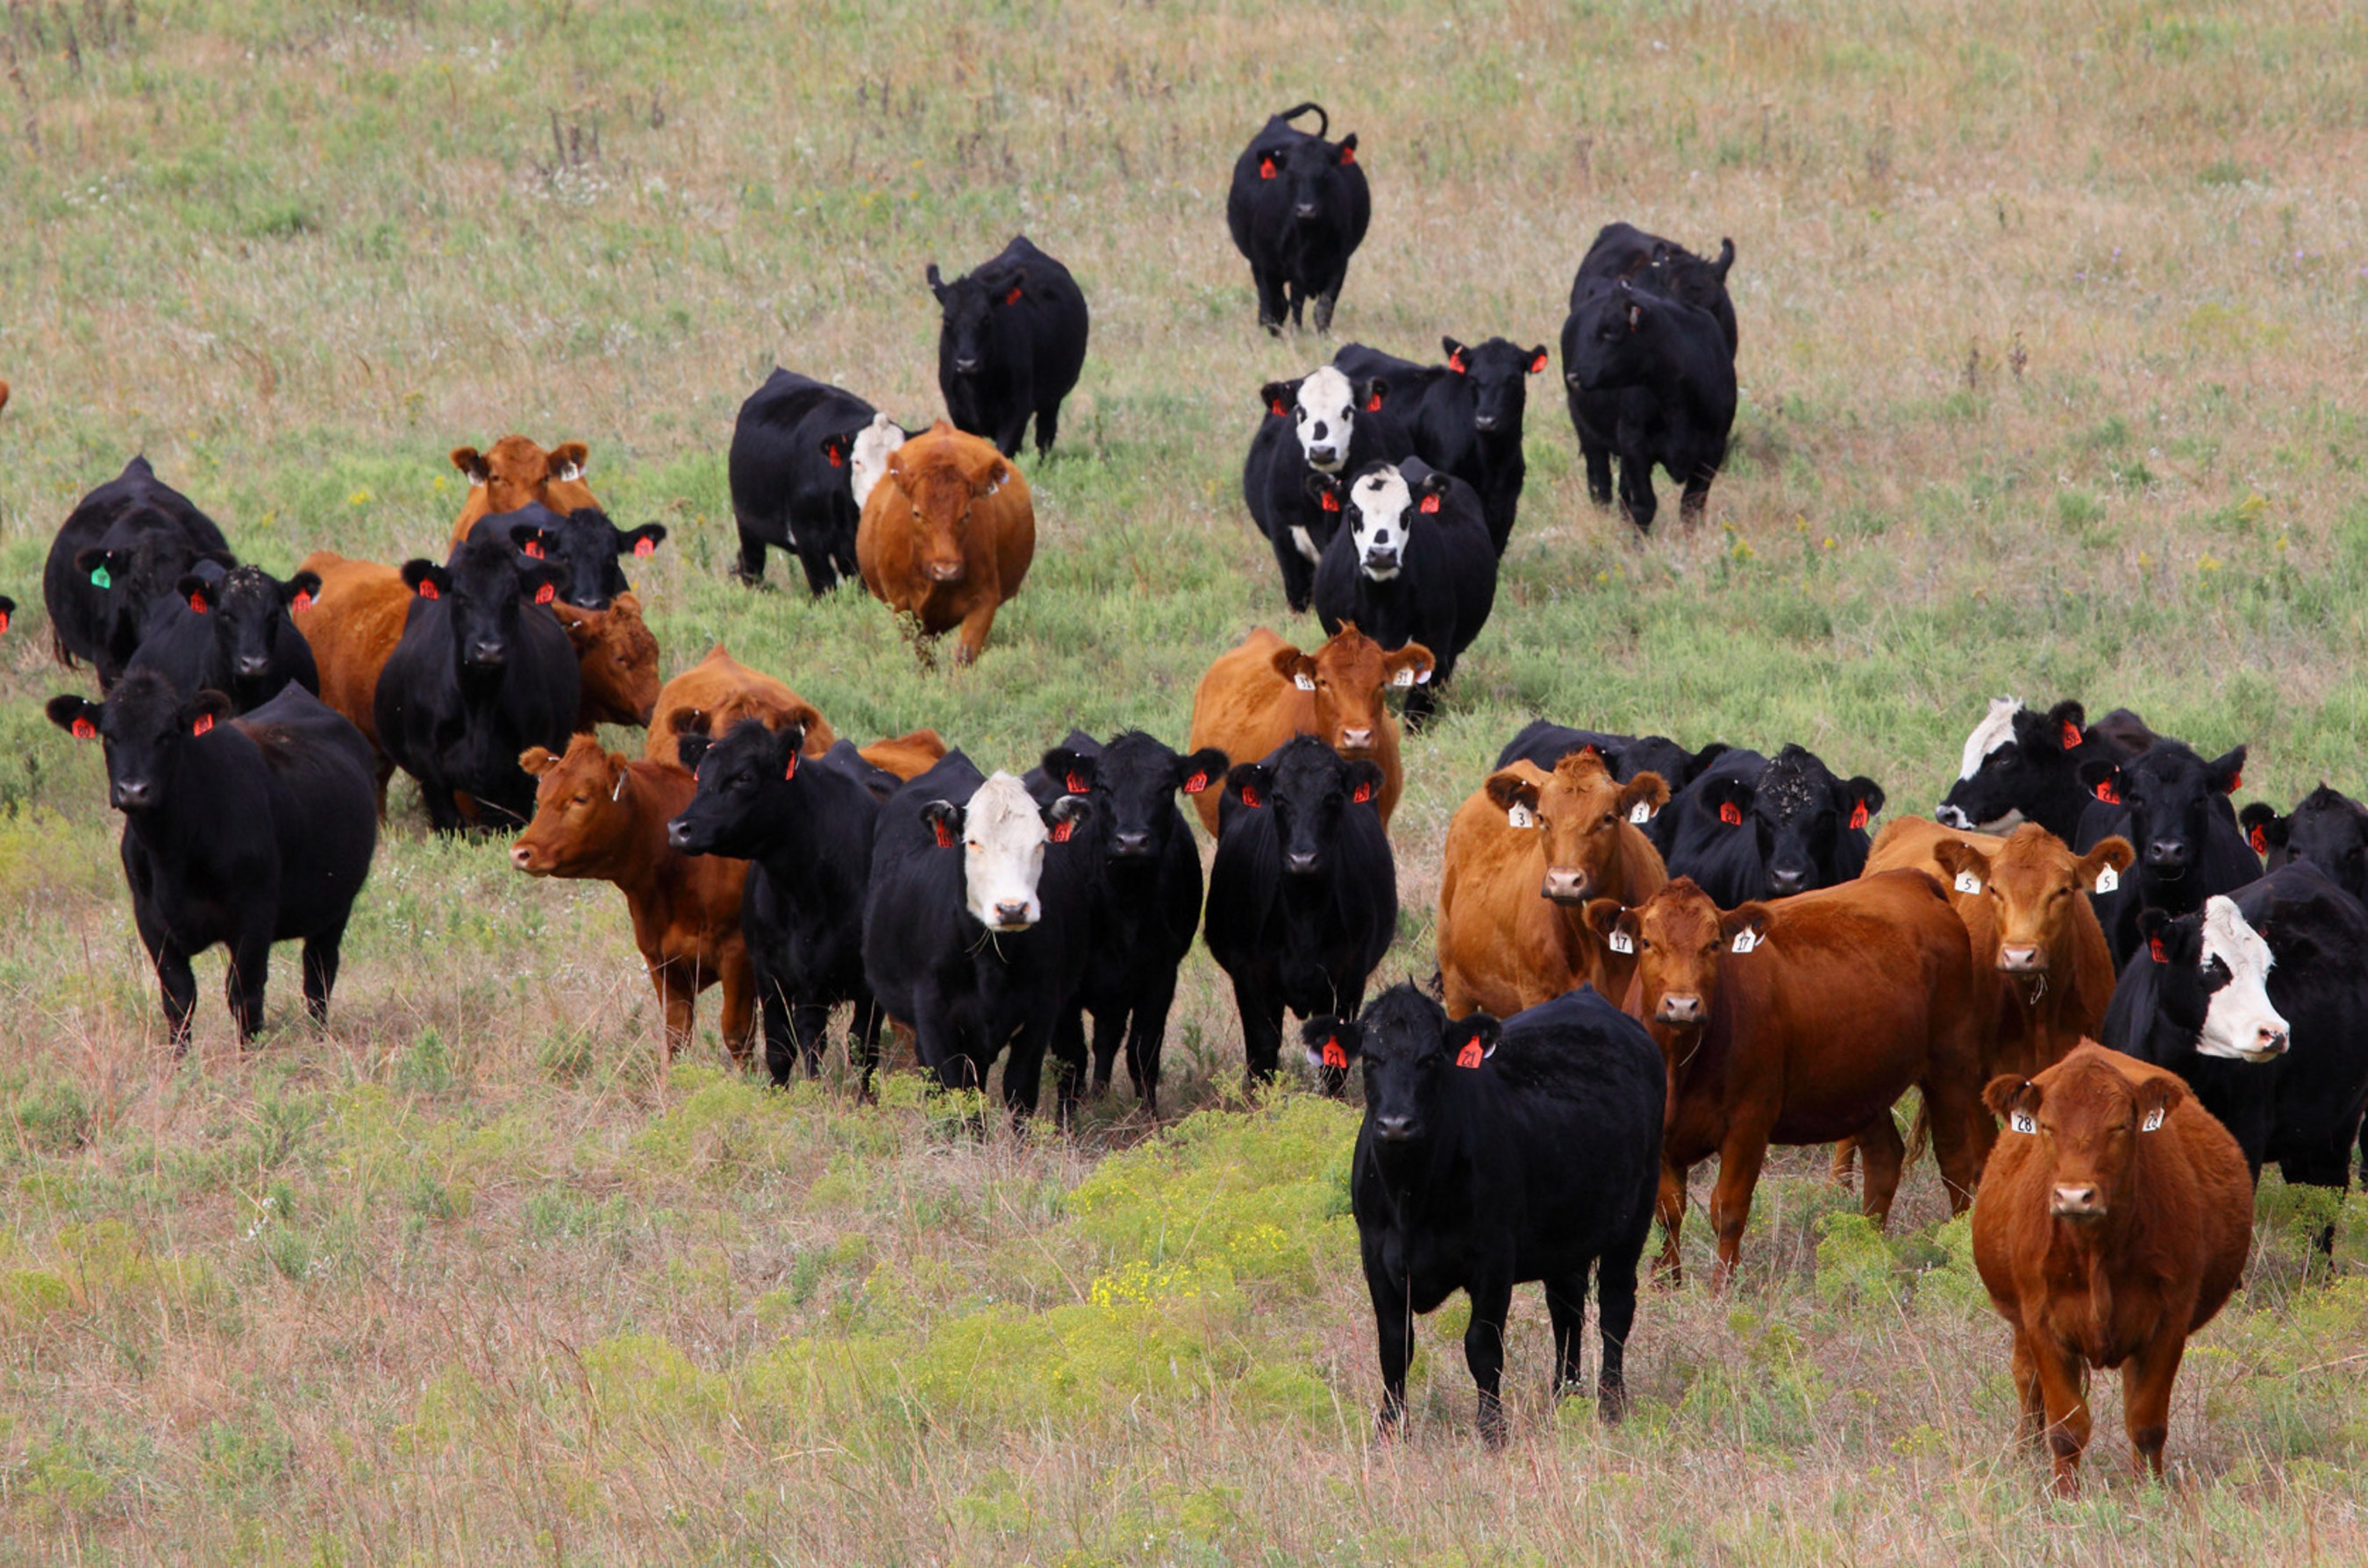 Cattle grazing in Kansas, Fall 2014.